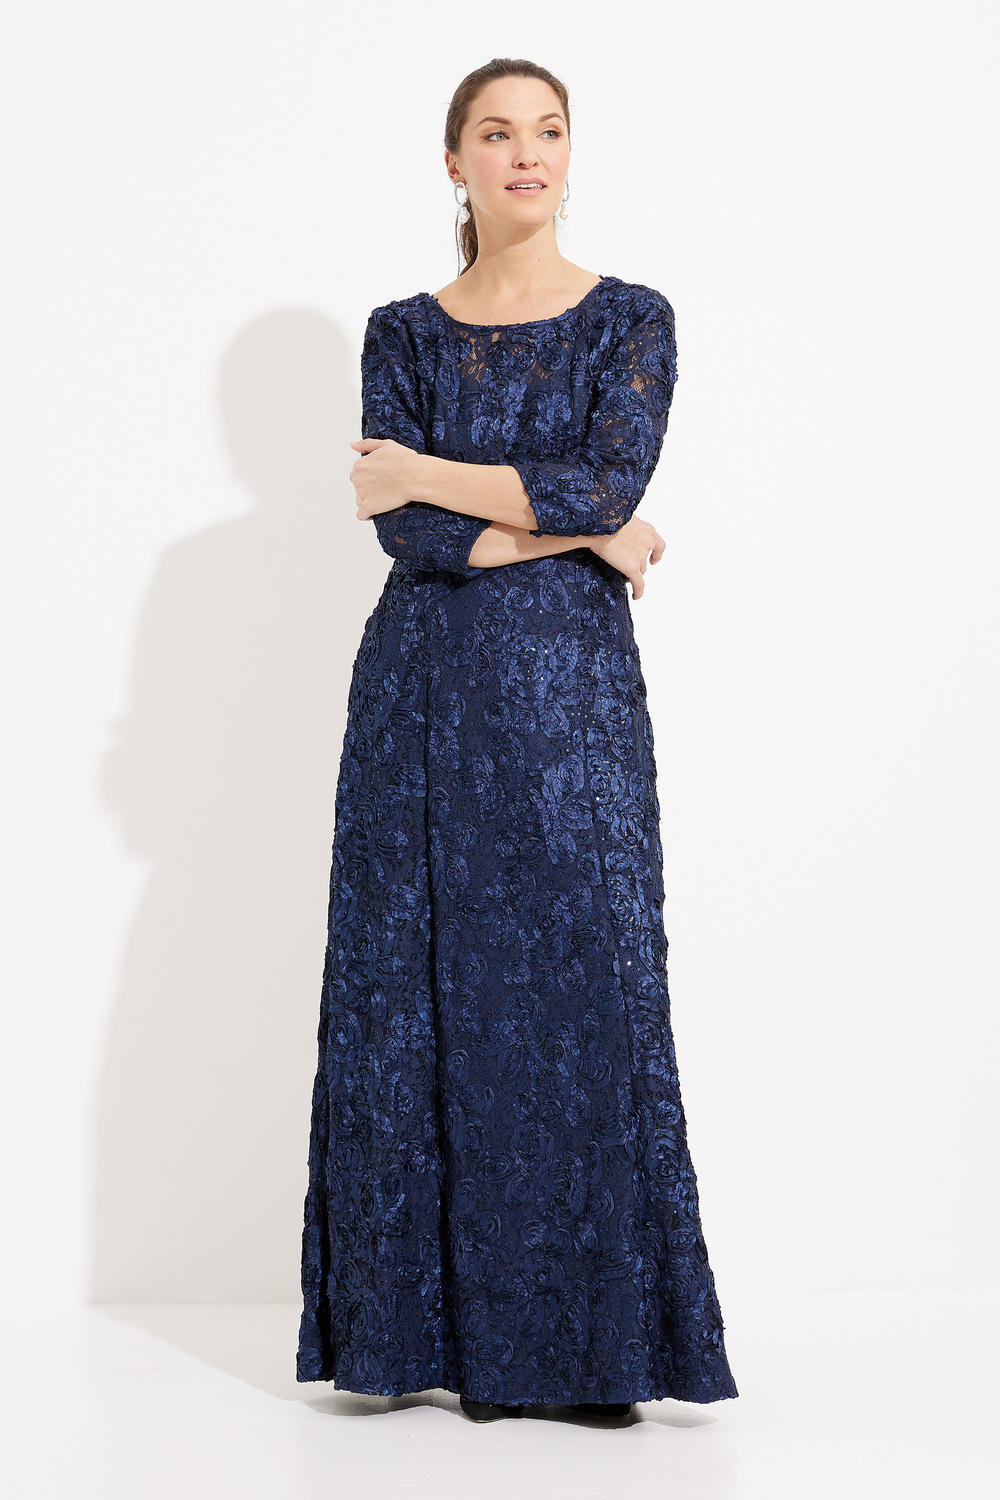 Illusion Rosette Dress Style 81122539. Navy